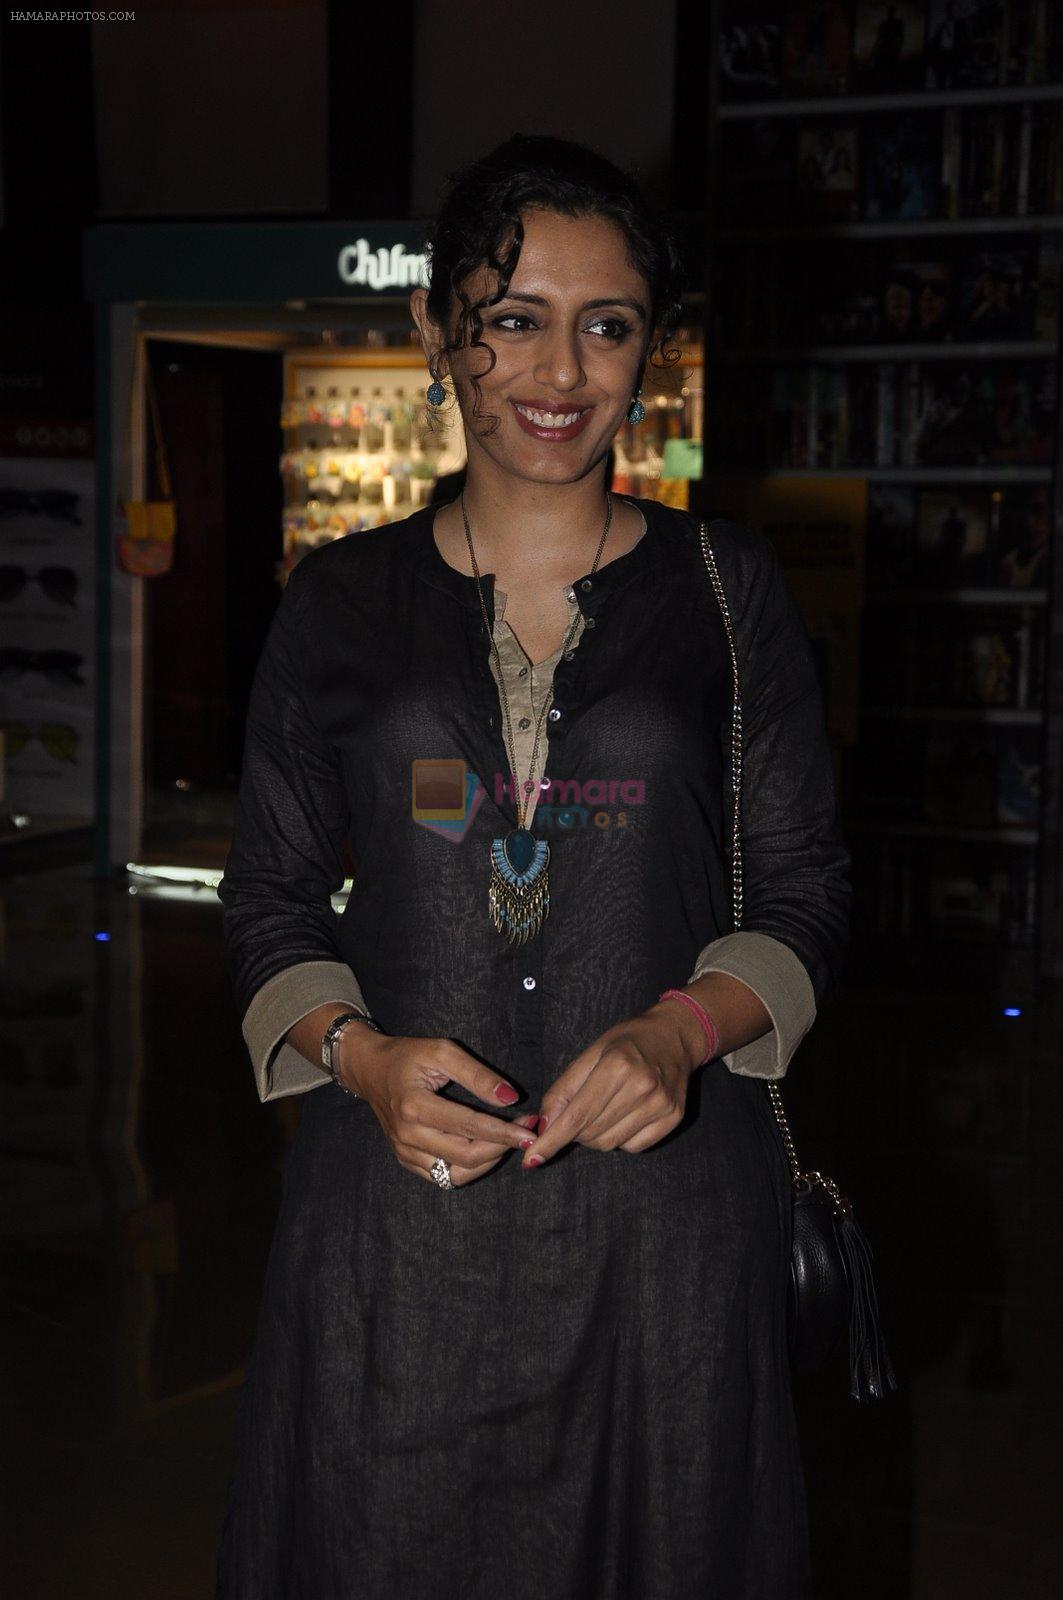 Parveen Dusanj at the premiere of the film Interstellar in PVR Imax, Mumbai on 5th Nov 2014